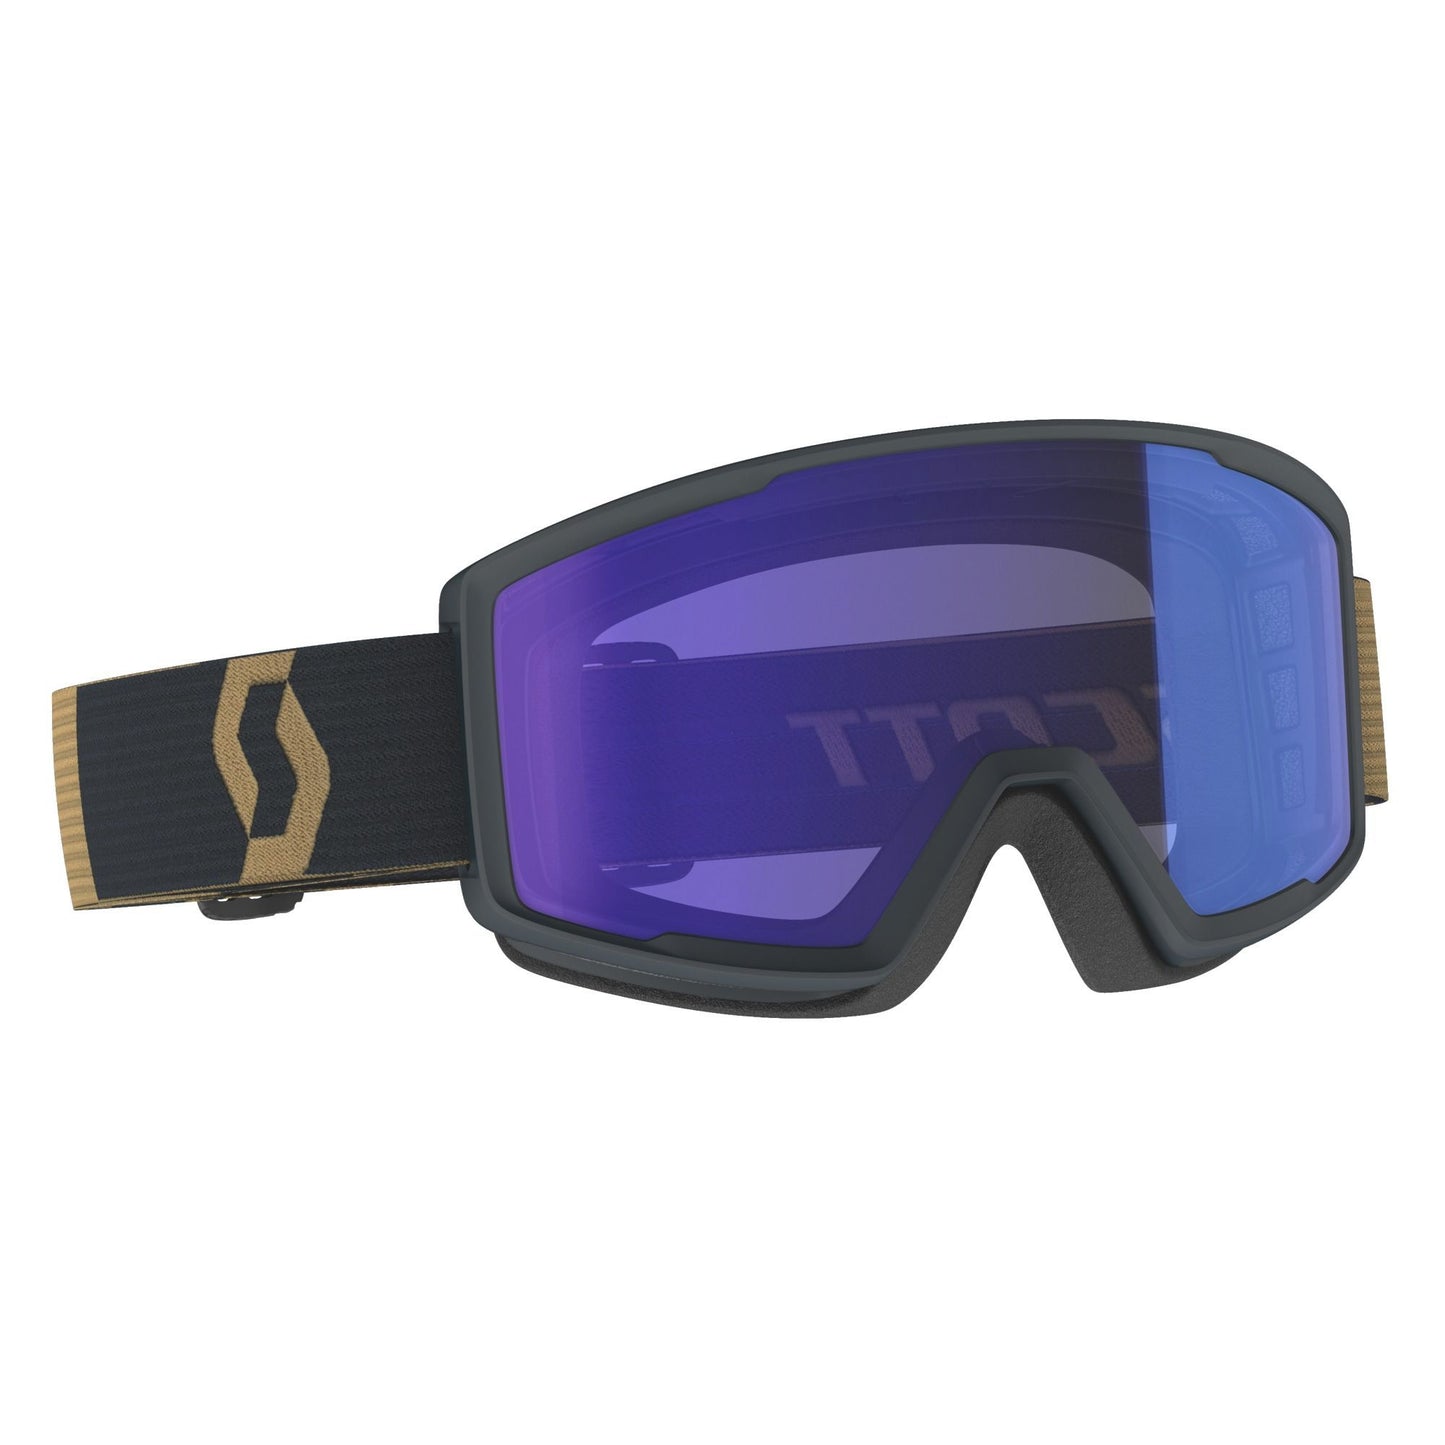 Scott Factor Pro Snow Goggle Team Beige/Aspen Blue / Illuminator Blue Chrome Snow Goggles